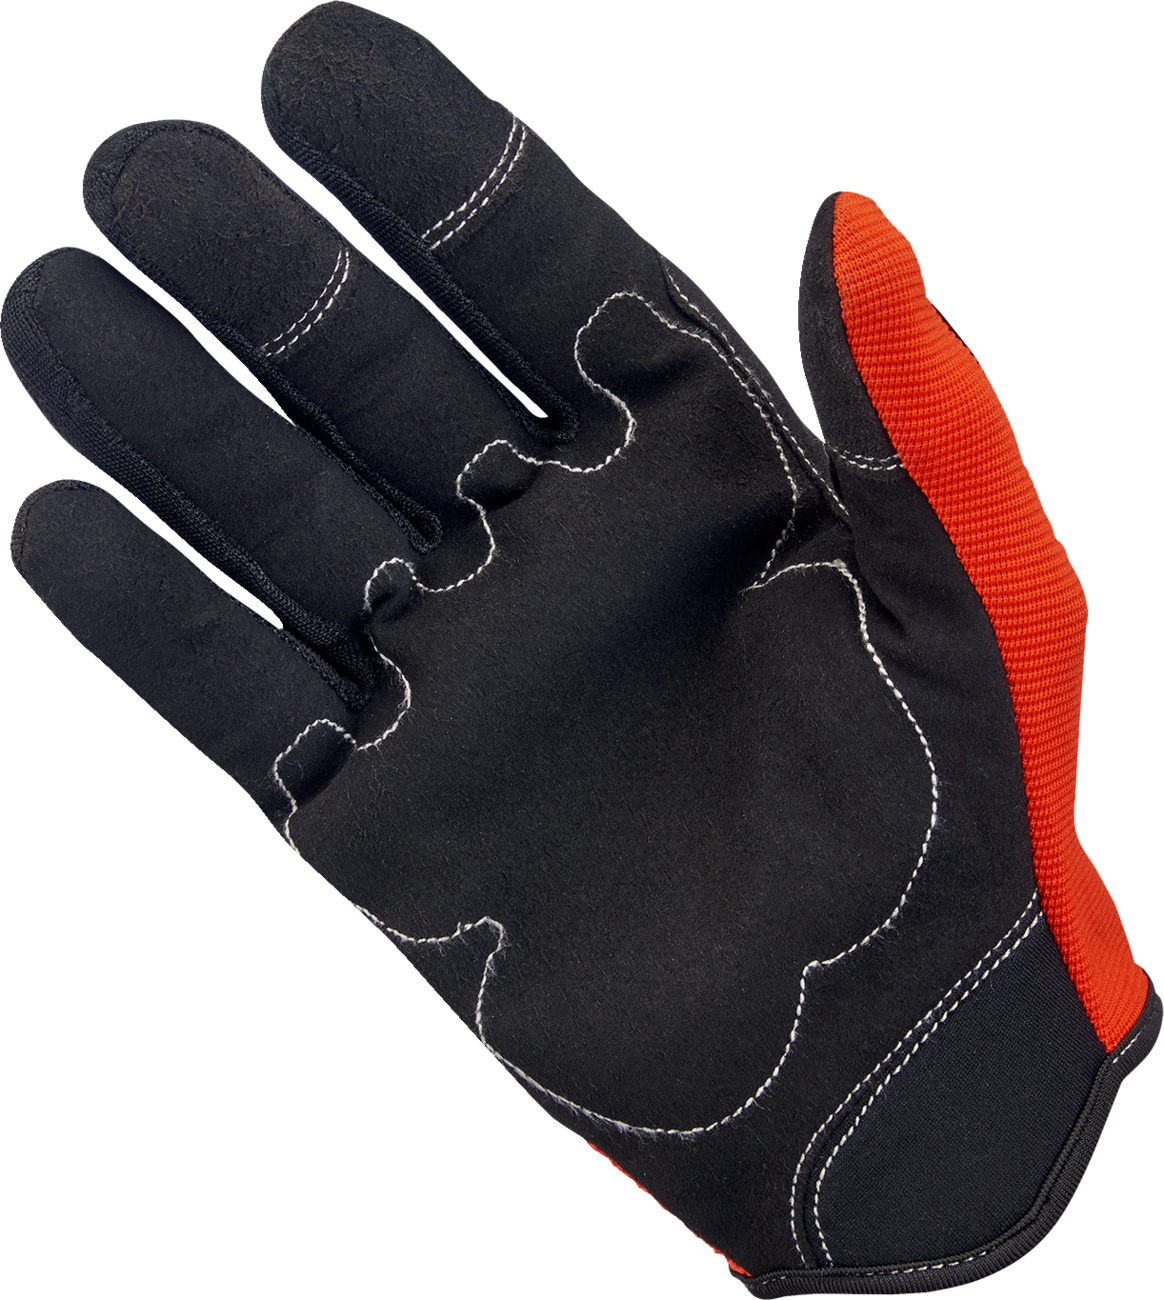 BILTWELL Moto Gloves - Orange/Black - XS 1501-0106-001